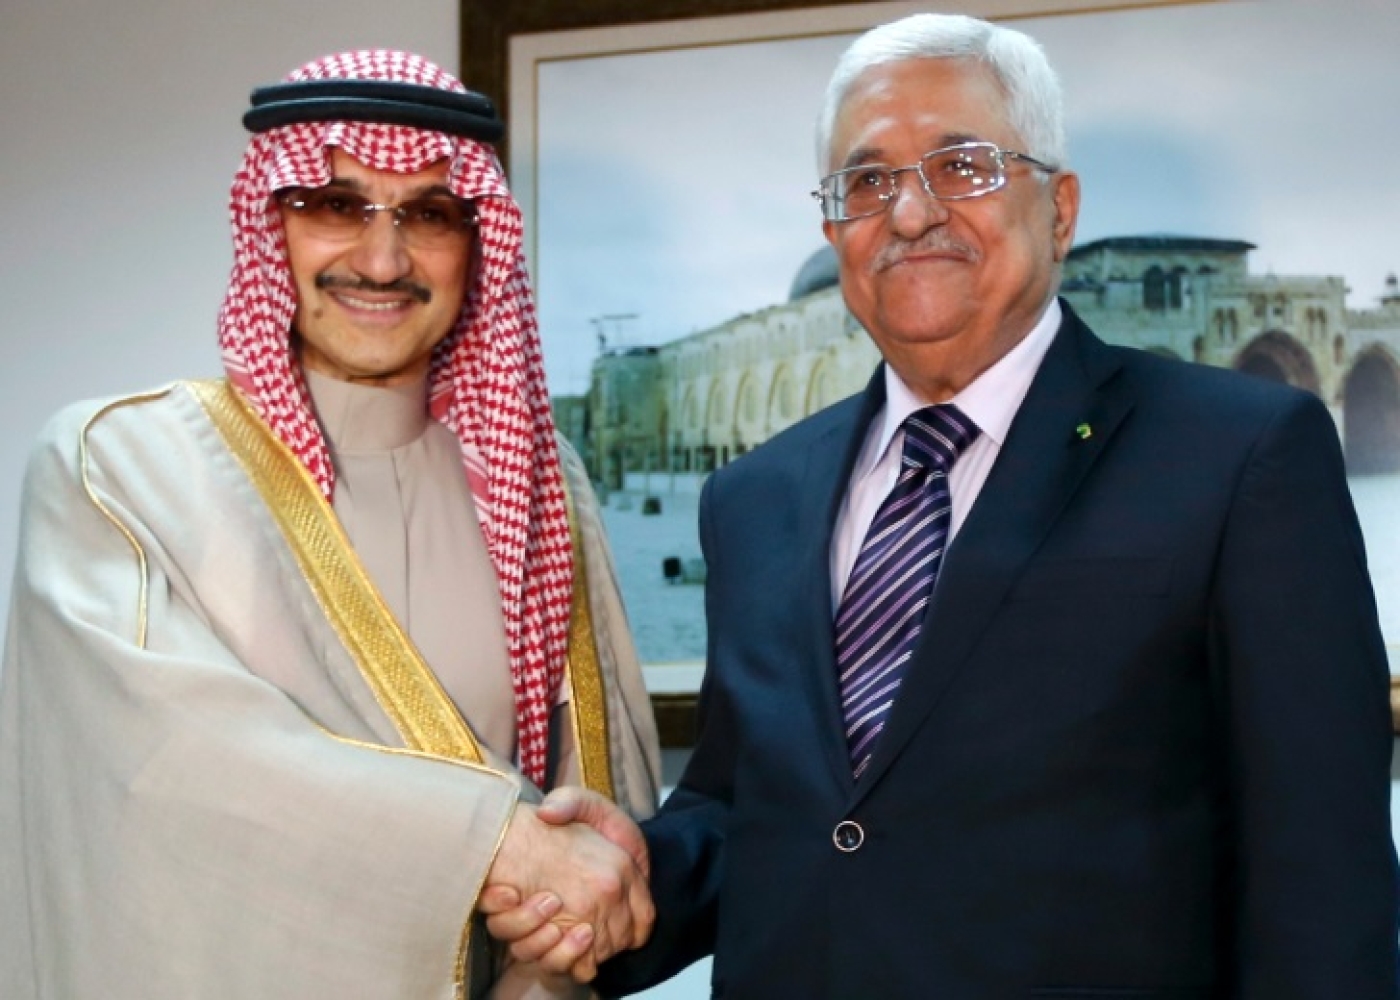 talal bin alwaleed prince saudi quotes attributed viral fabricated go israel palestine afp abbas palestinian mahmoud shakes arabia president hands